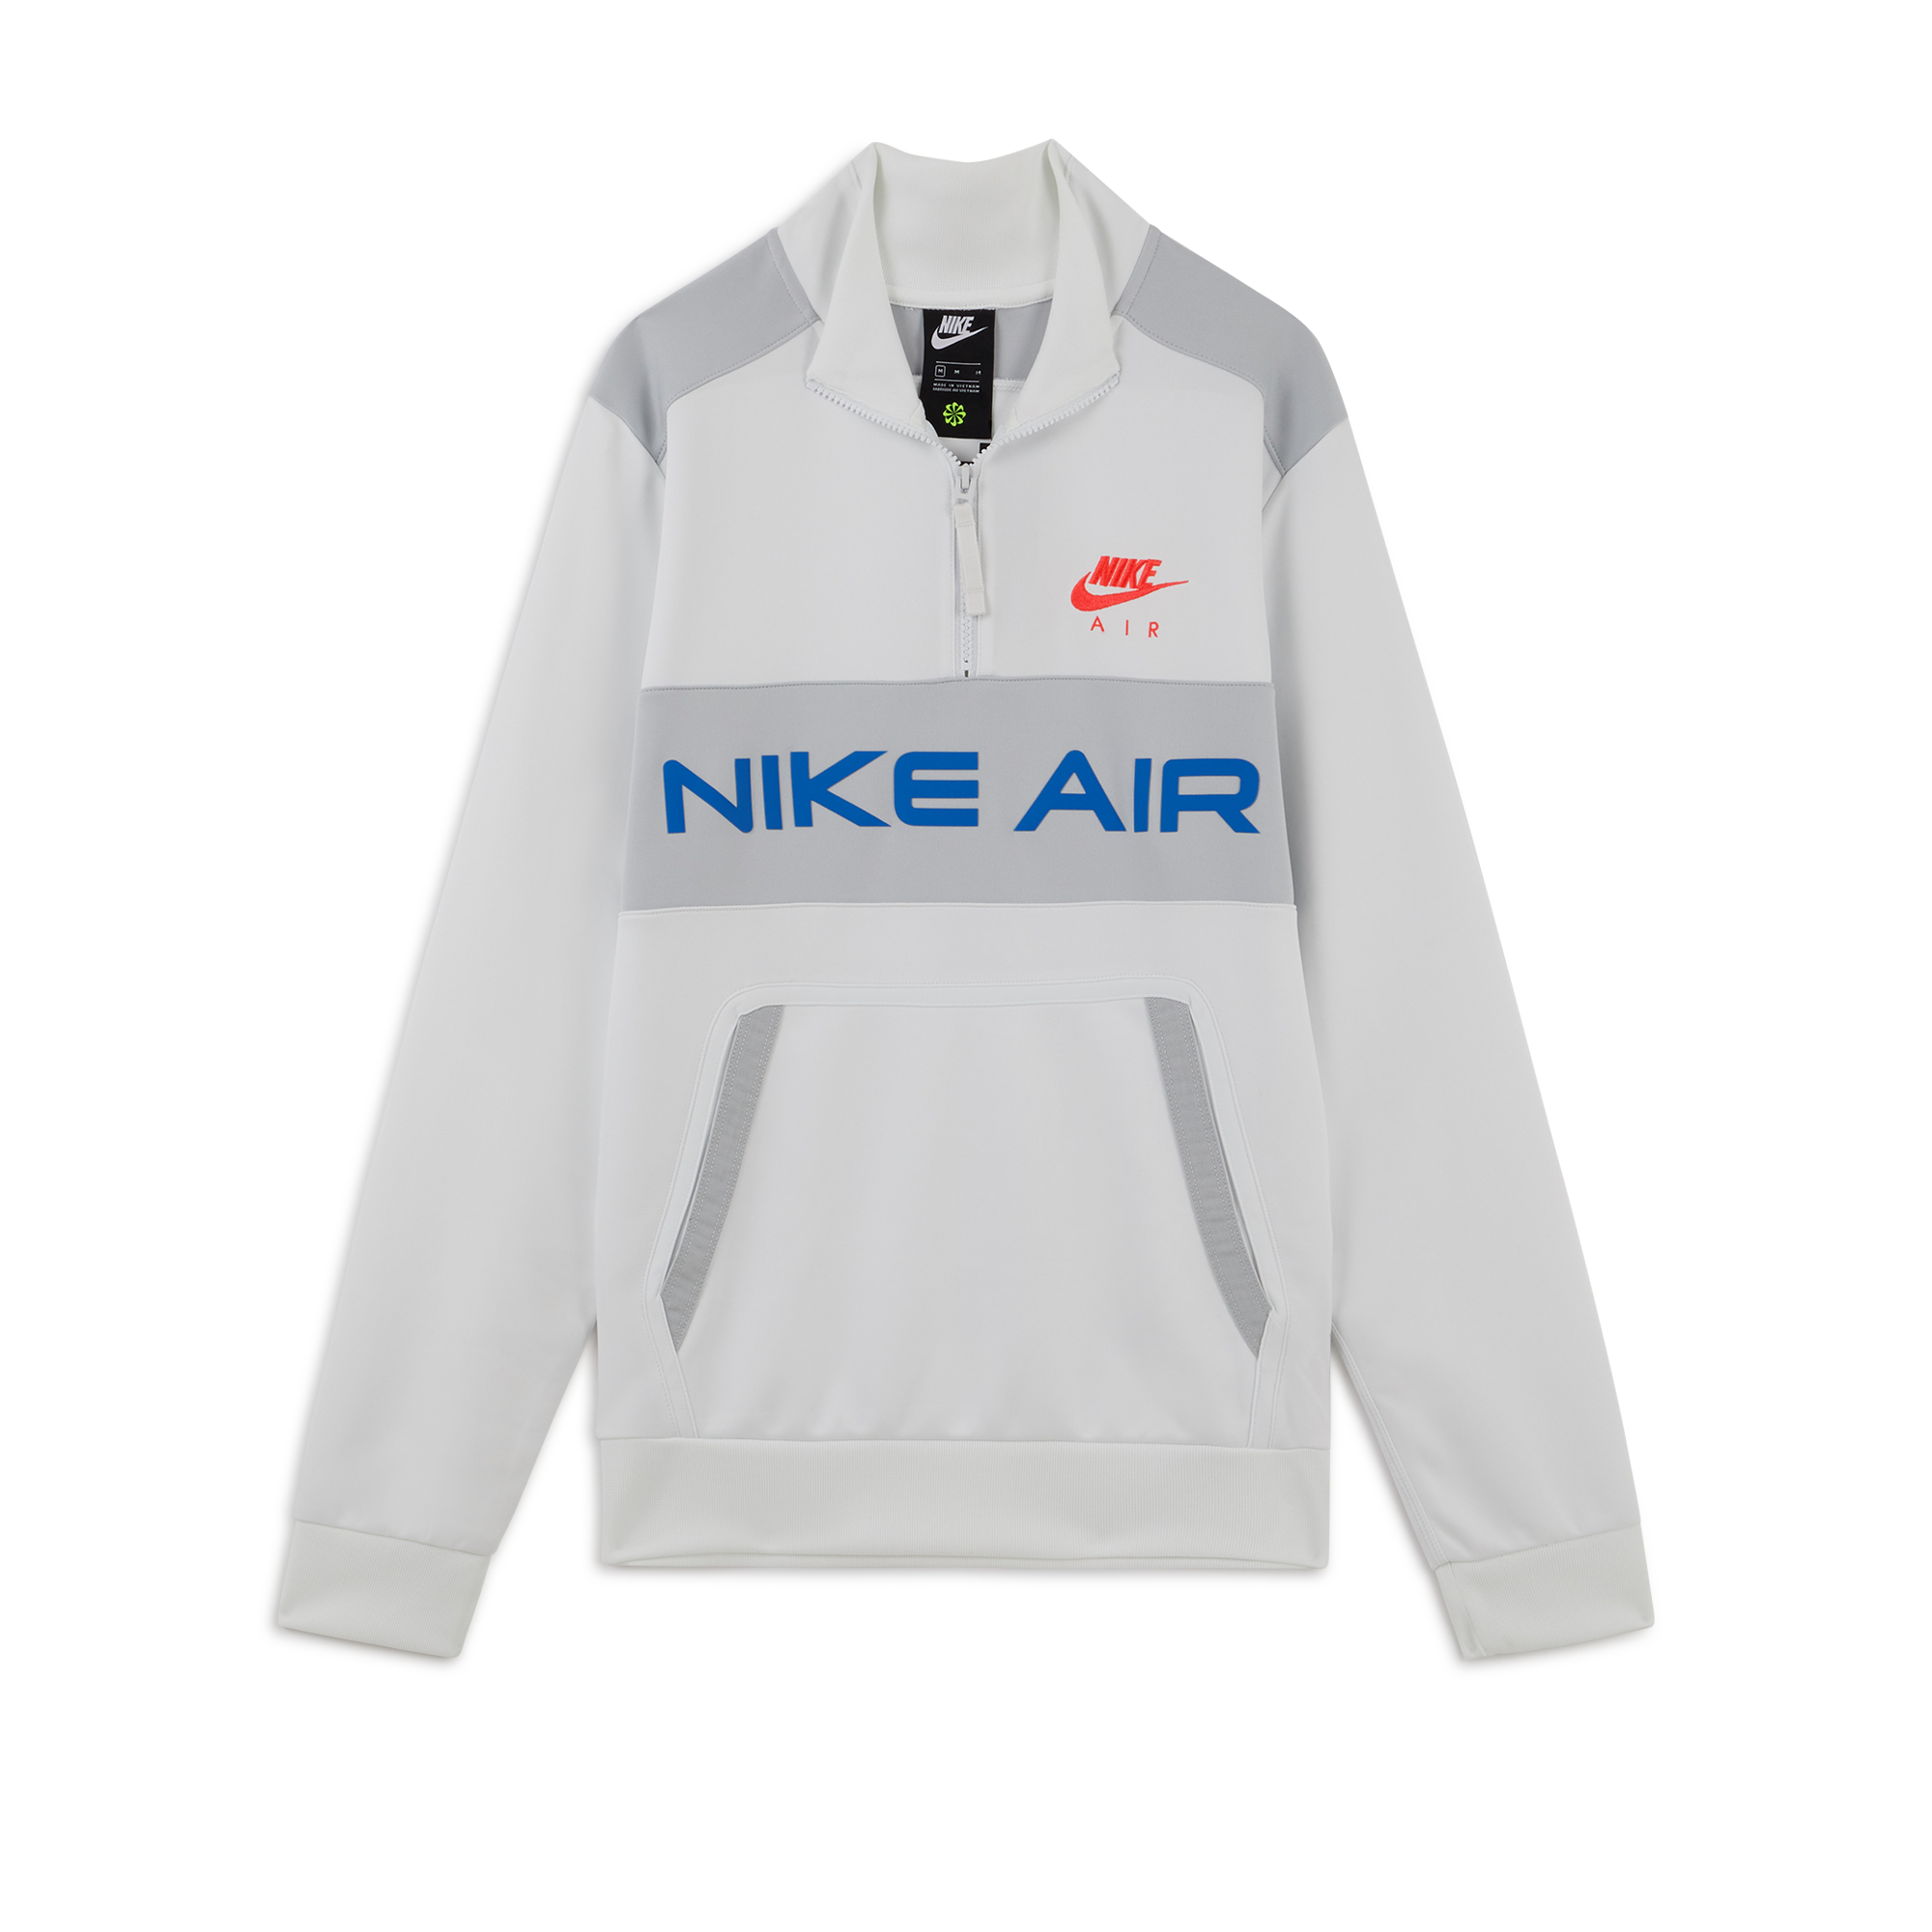 Jacket Veste Nike Air Pk Blanc/gris/bleu